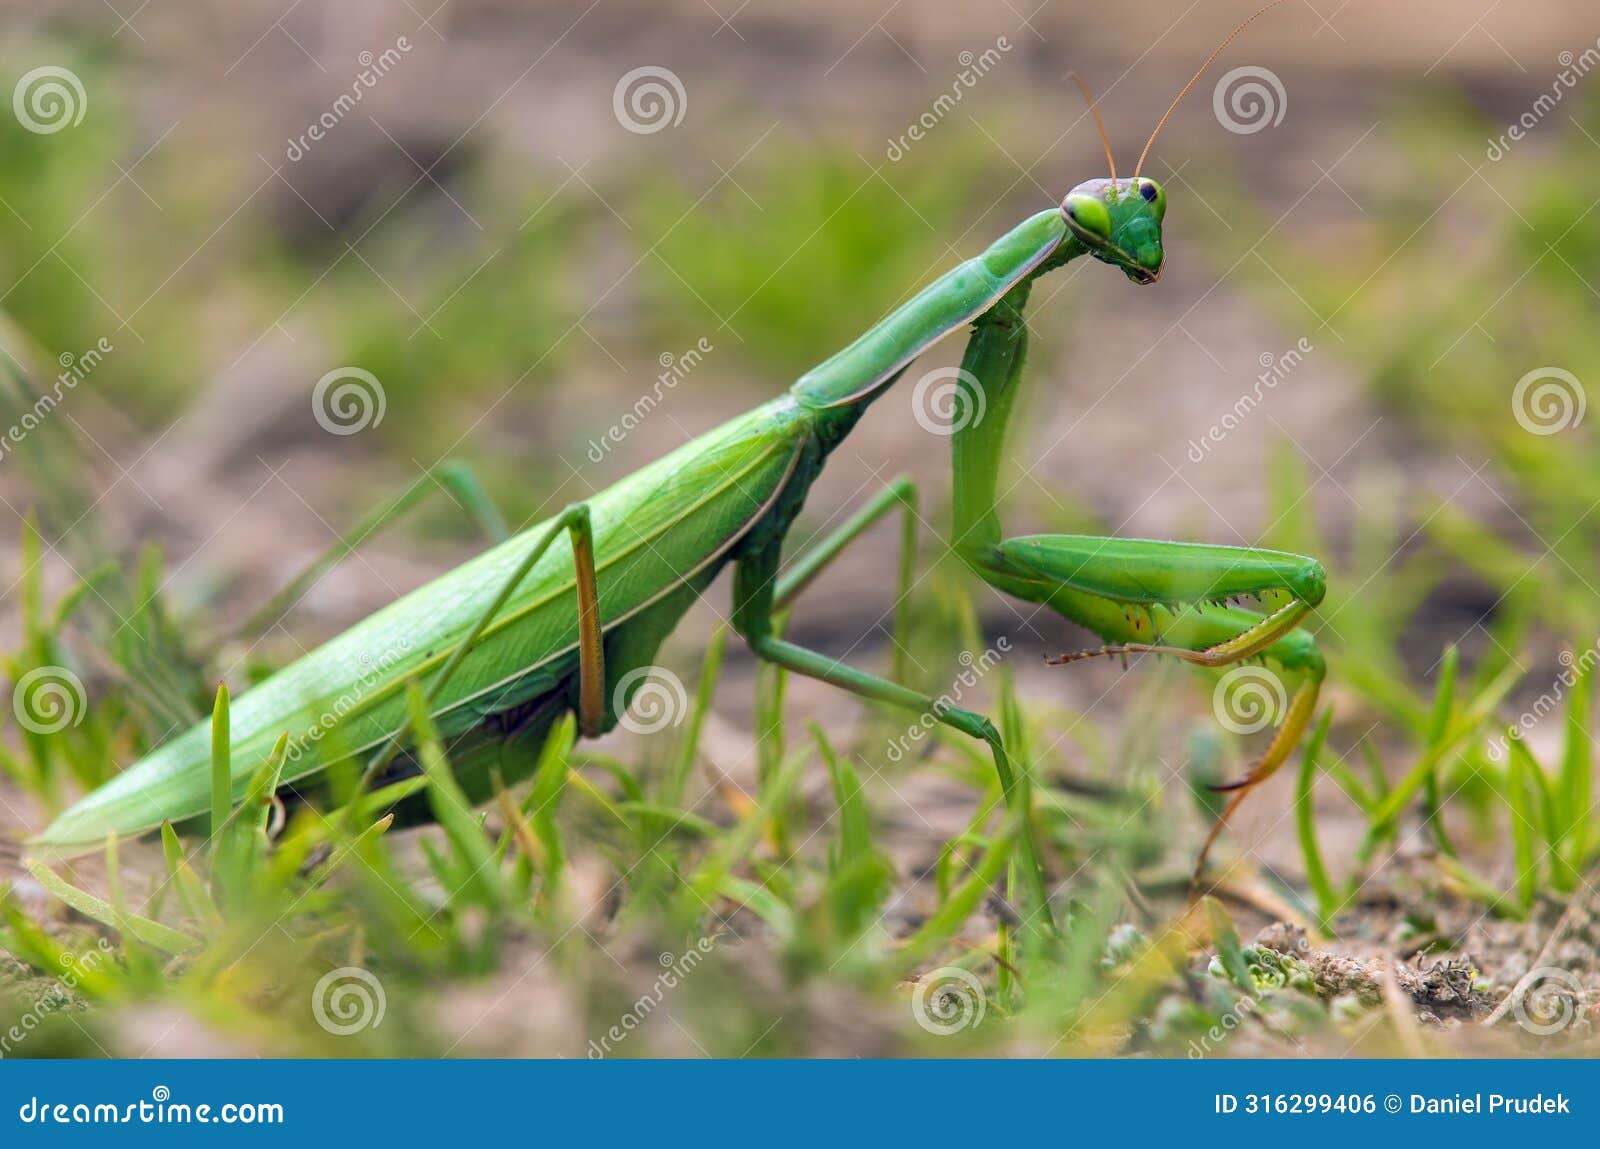 european mantis or praying mantis, mantis religiosa